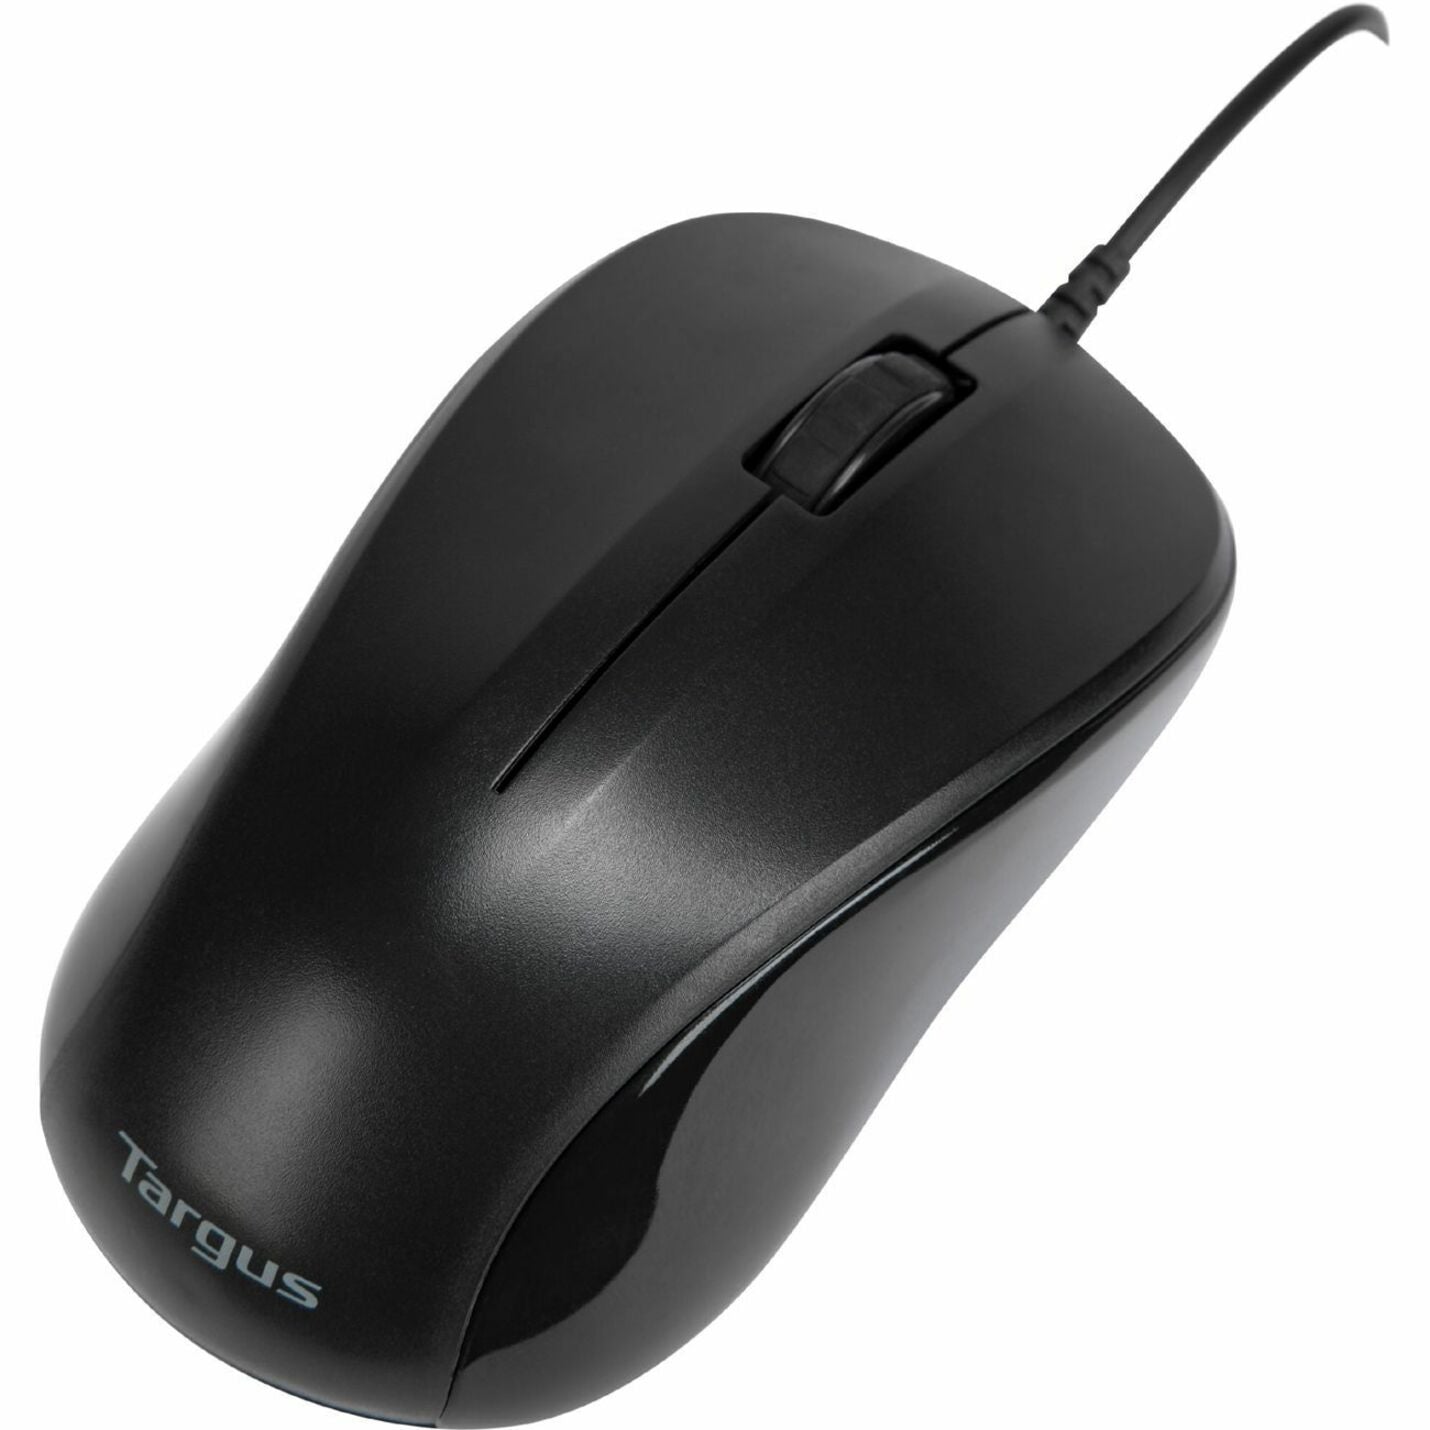 Targus AMU80US USB Optical Laptop Mouse, Ergonomic Fit, 1000 dpi, 3 Buttons, Black